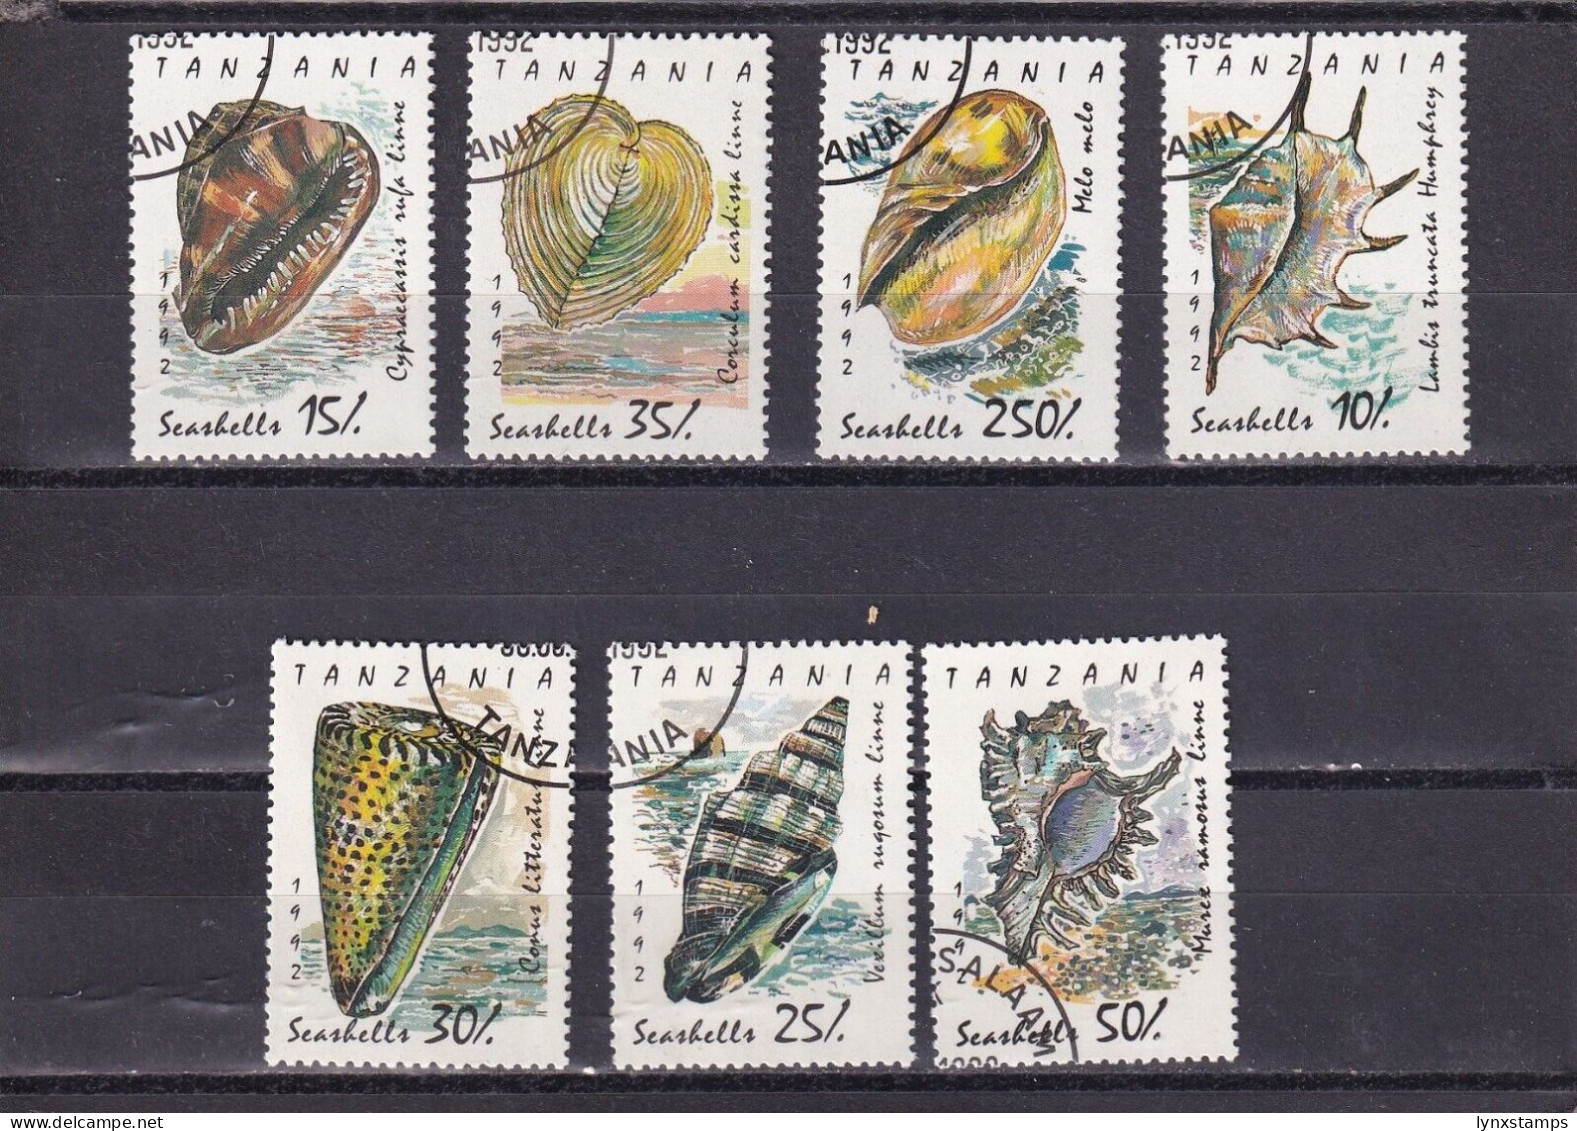 SA03 Tanzania 1992 Shells Used Stamps - Schalentiere